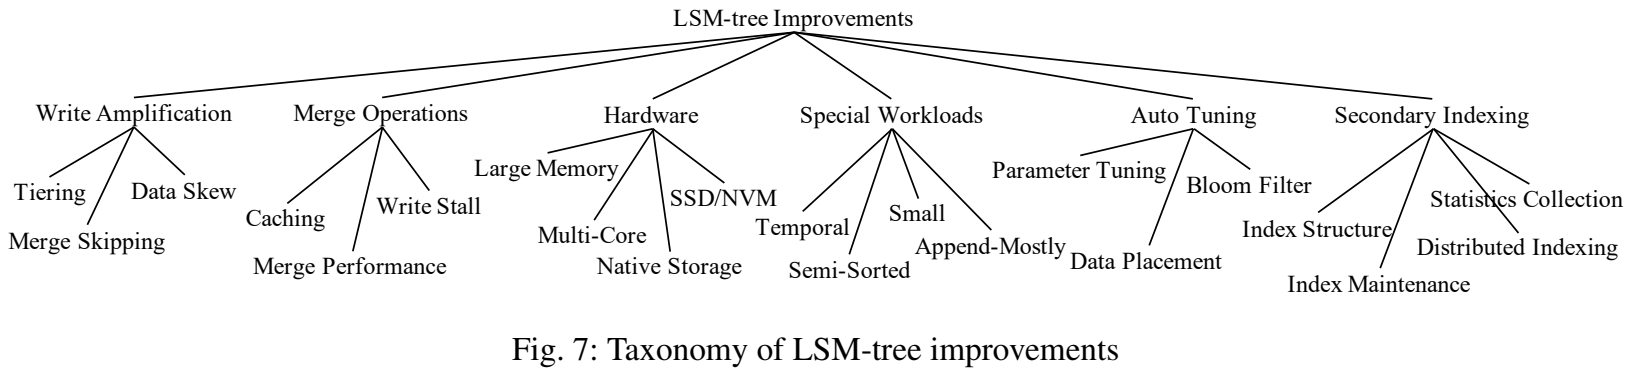 taxonomy-of-lsm-tree-improvements